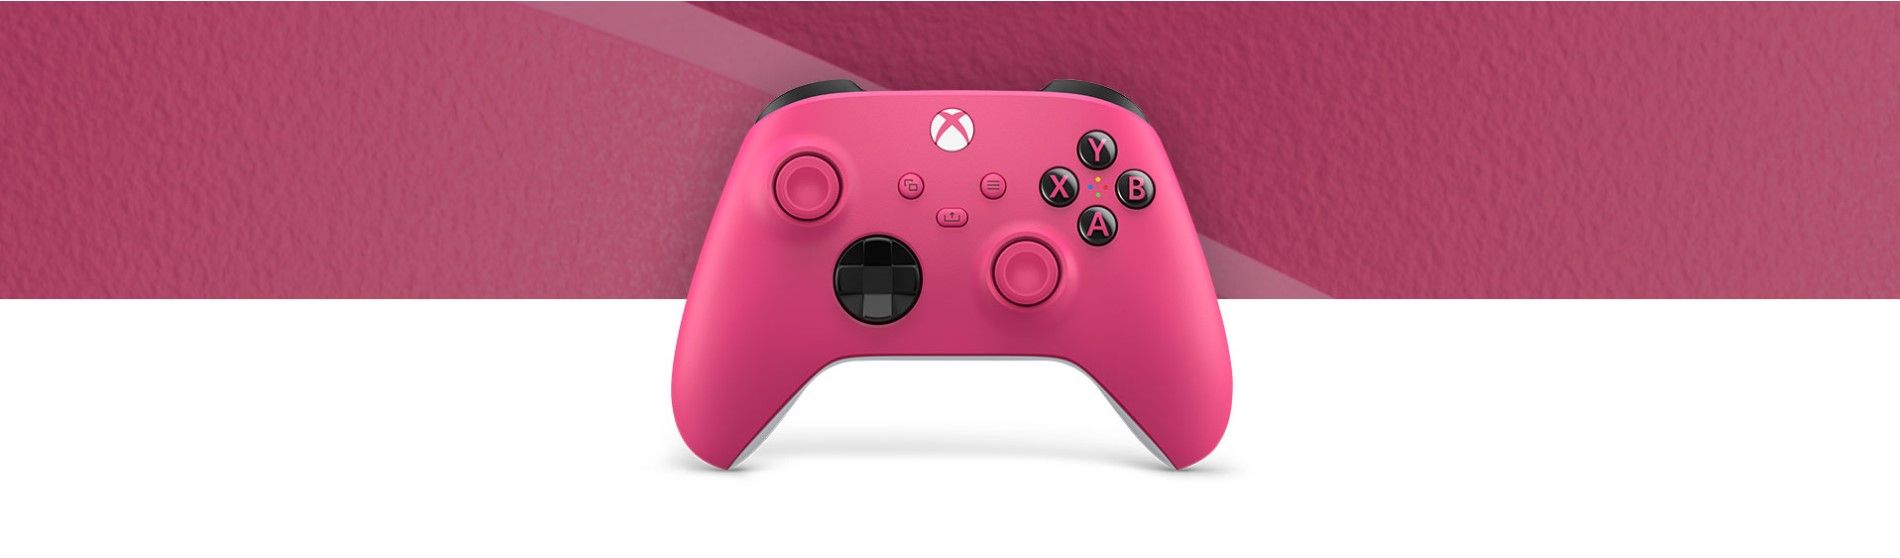 xbox series x deep pink controller